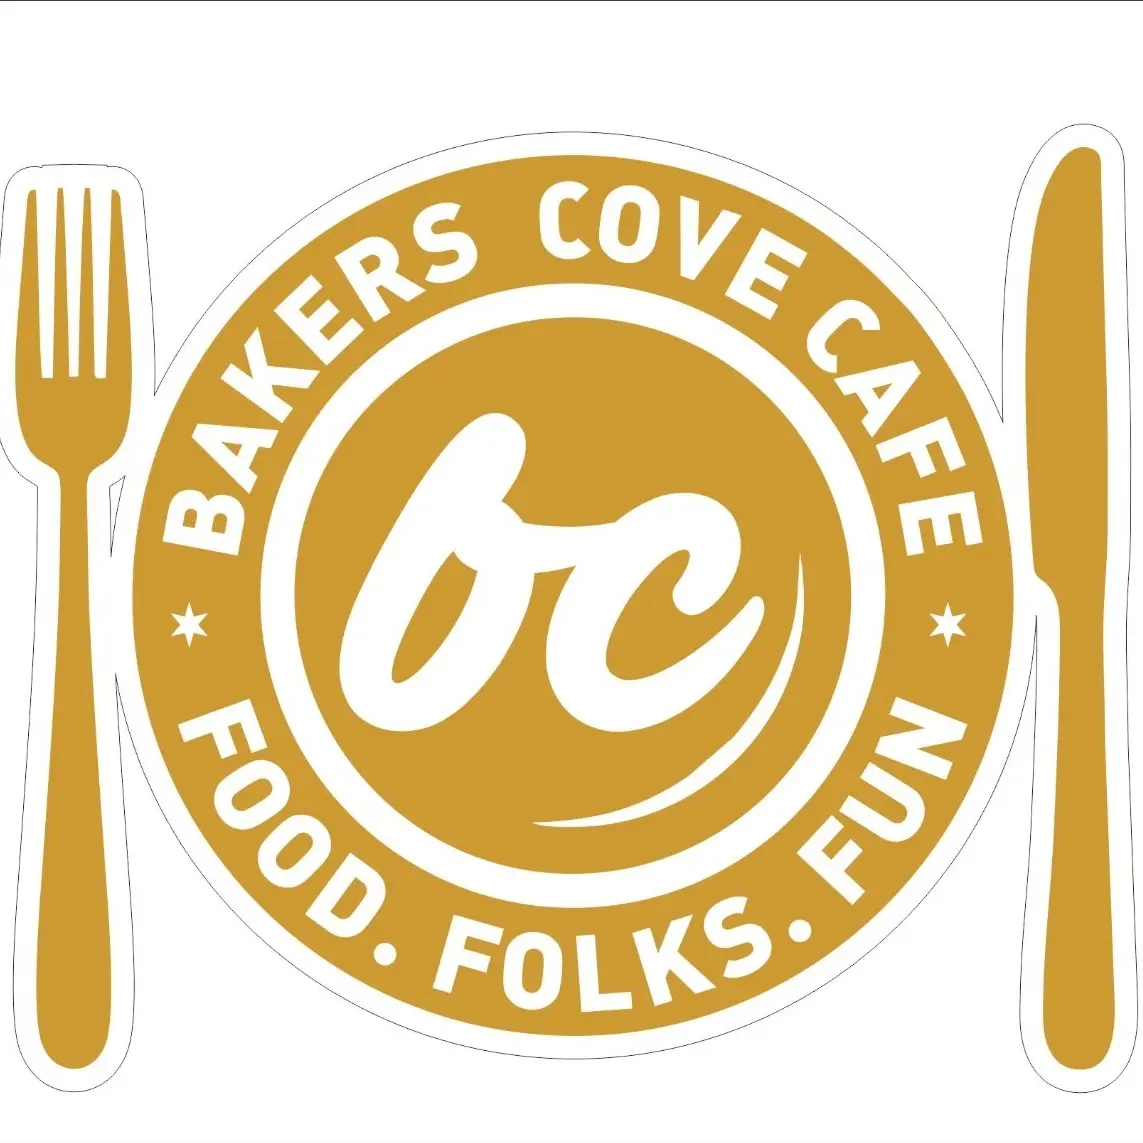 Baker's Cove Cafe